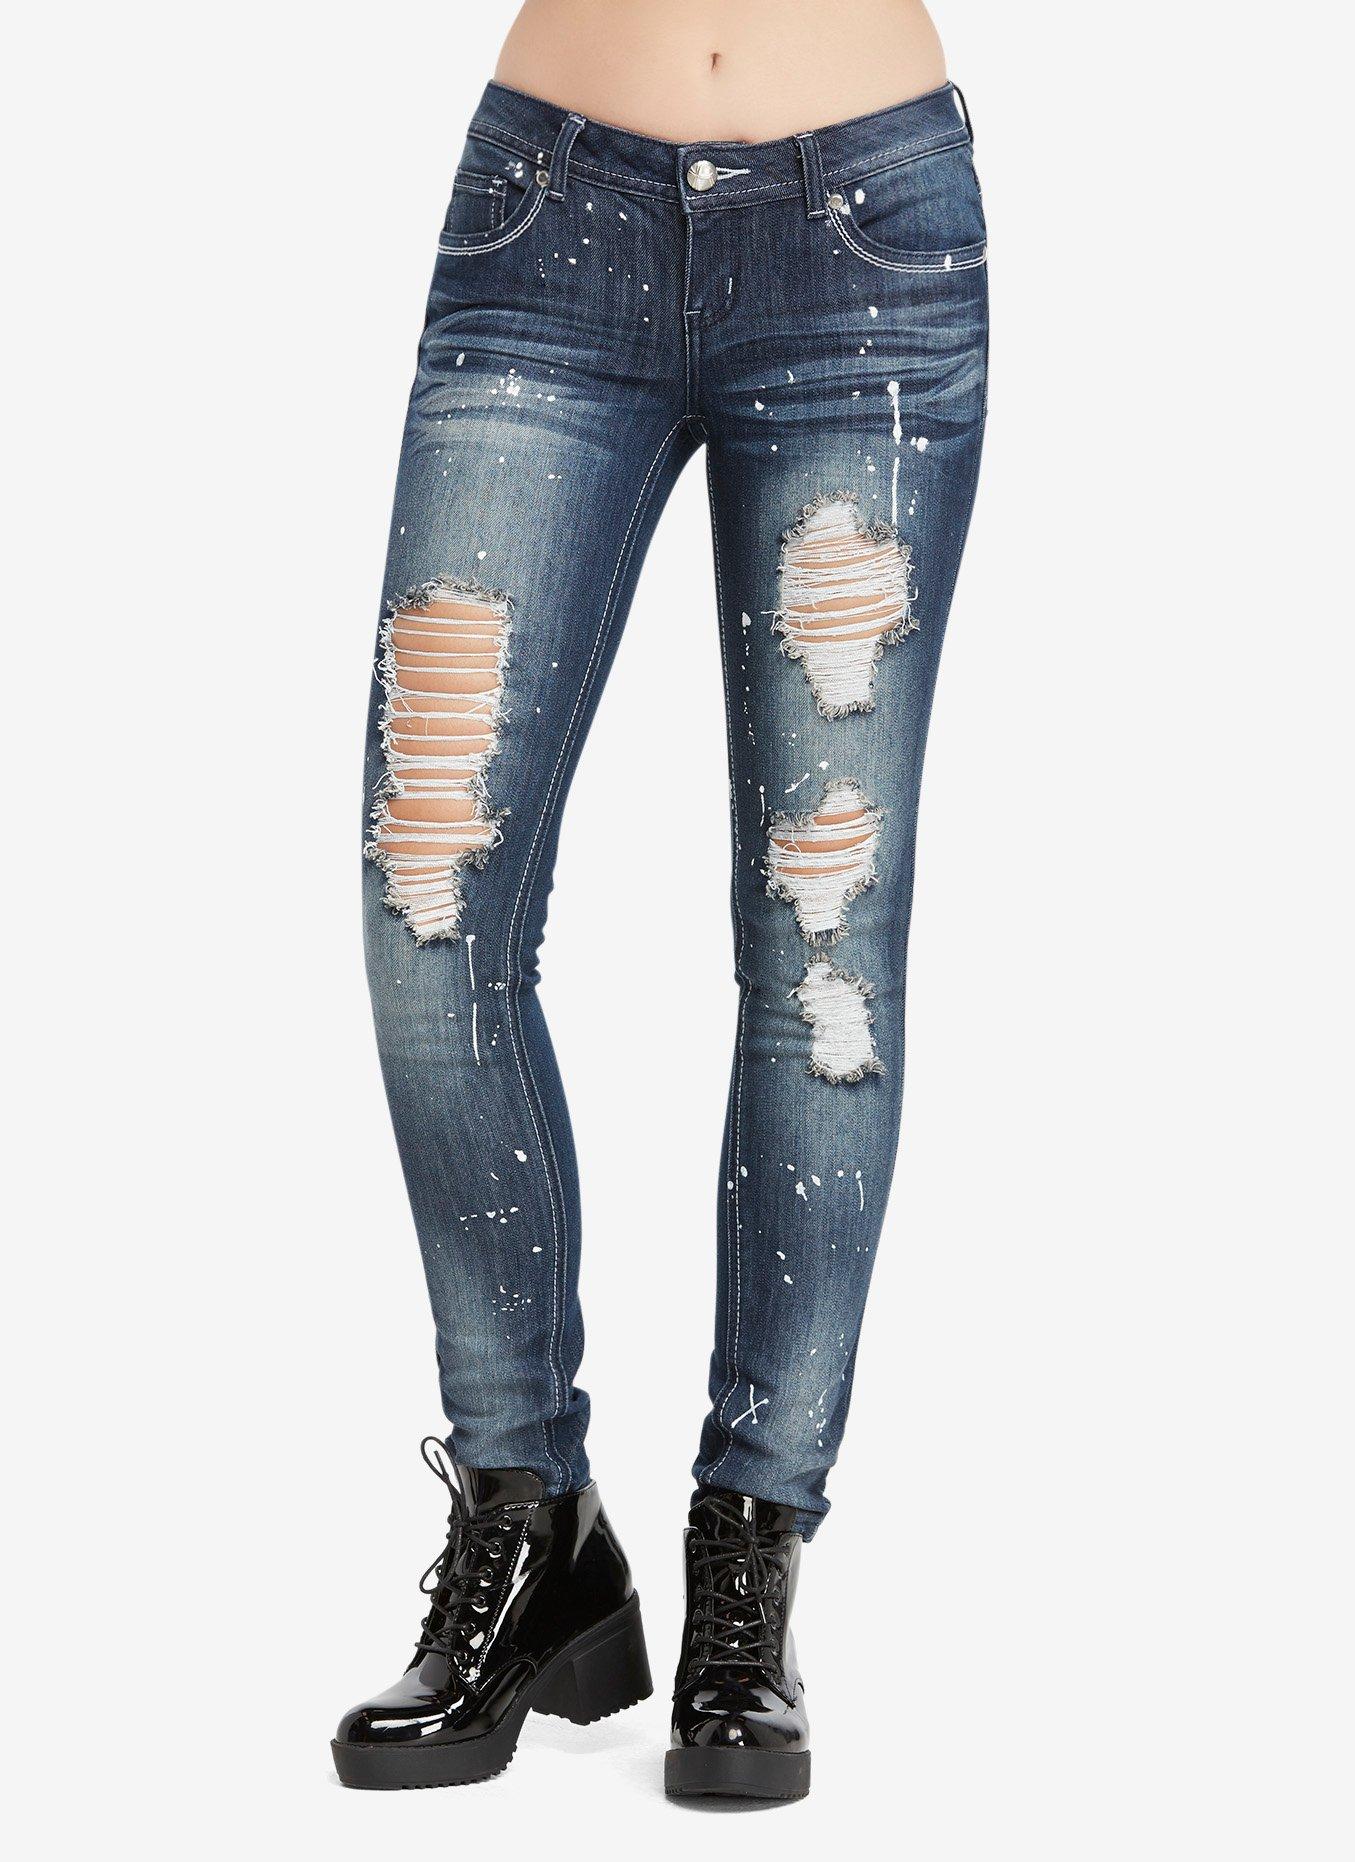 Dark Wash Distressed Splatter Skinny Jeans, DARK WASH, hi-res